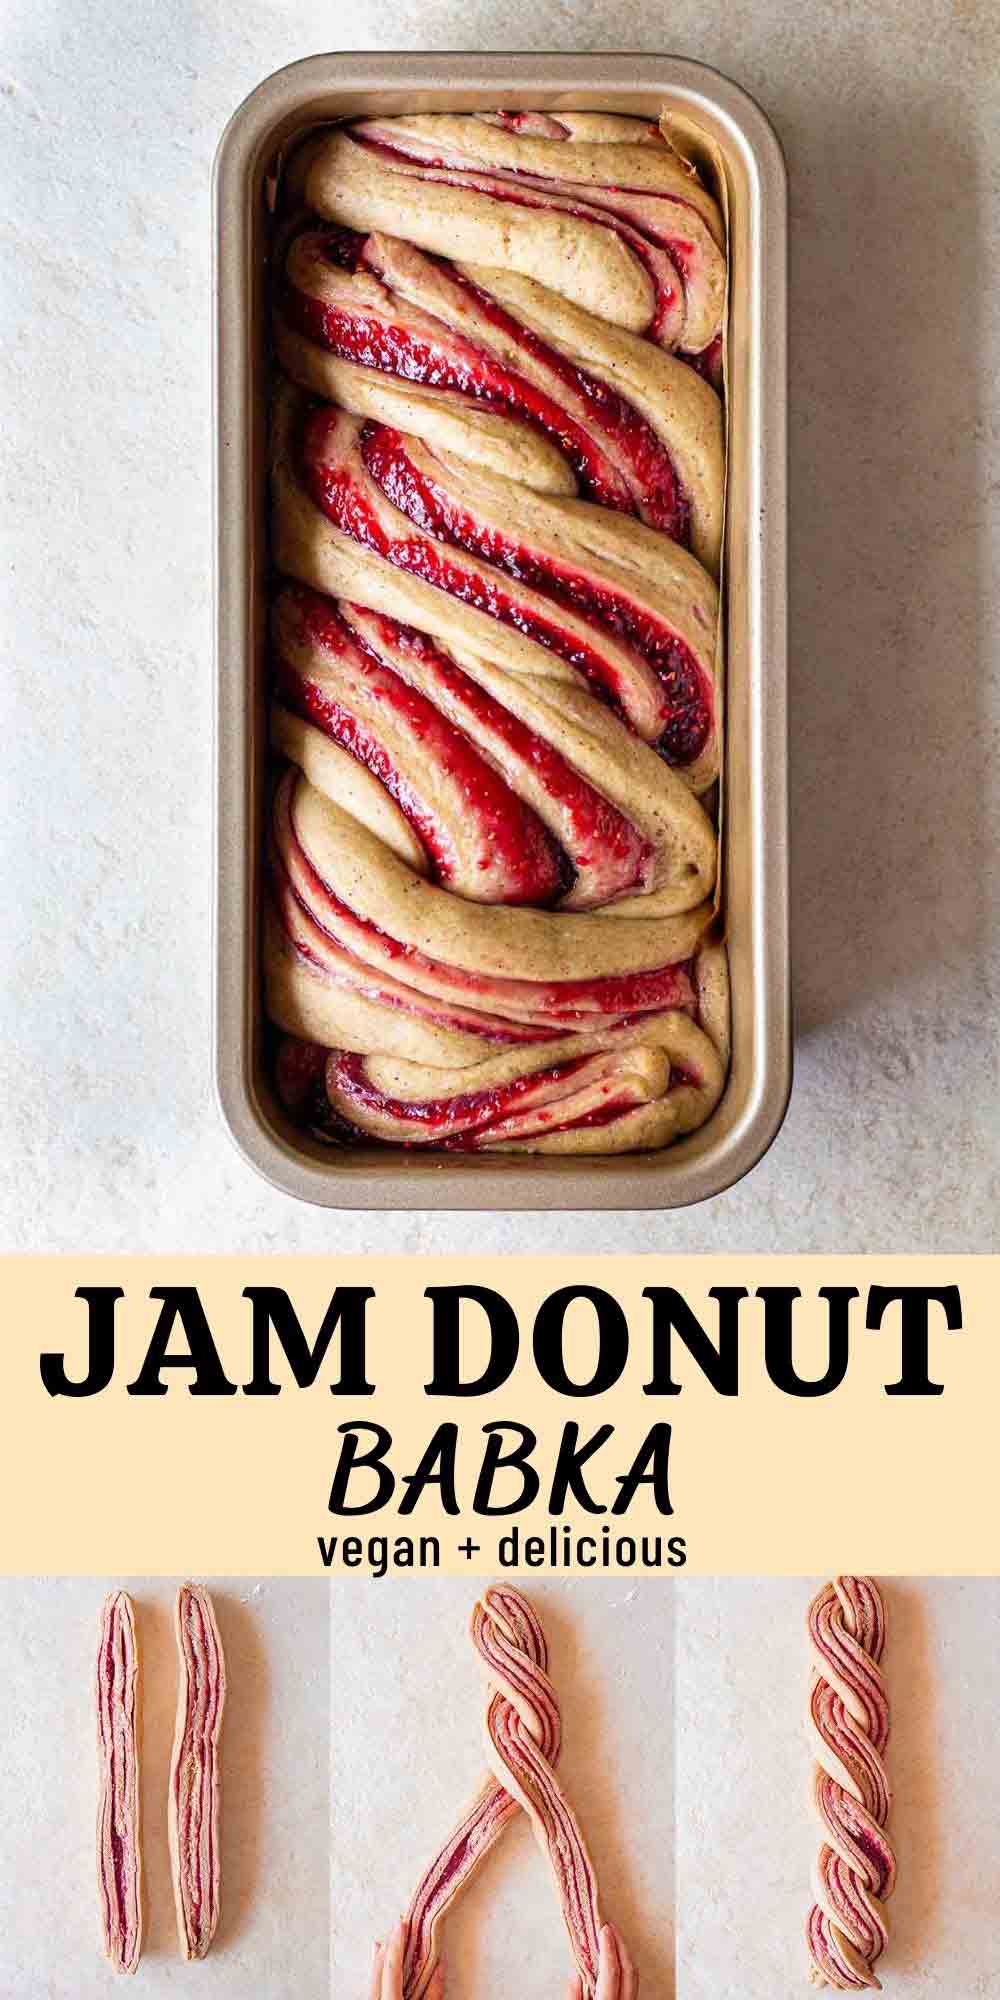 Jam donut babka (vegan)